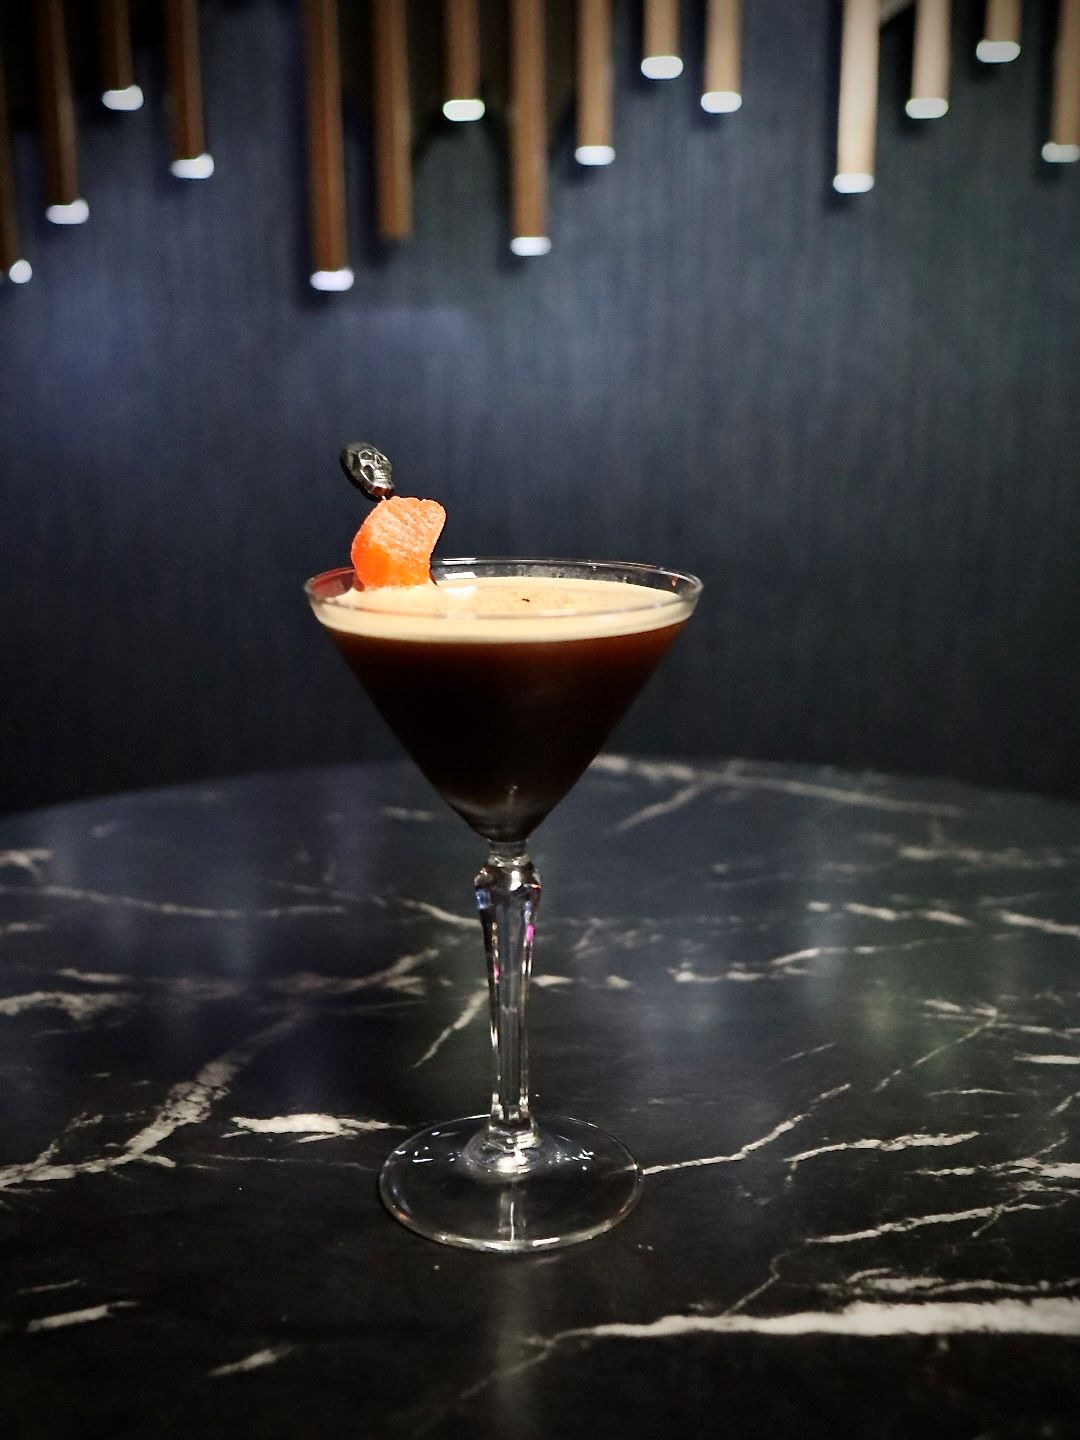 An image of the Hotel Dena cocktail, Spiced Pumpkin Pasadena Martini